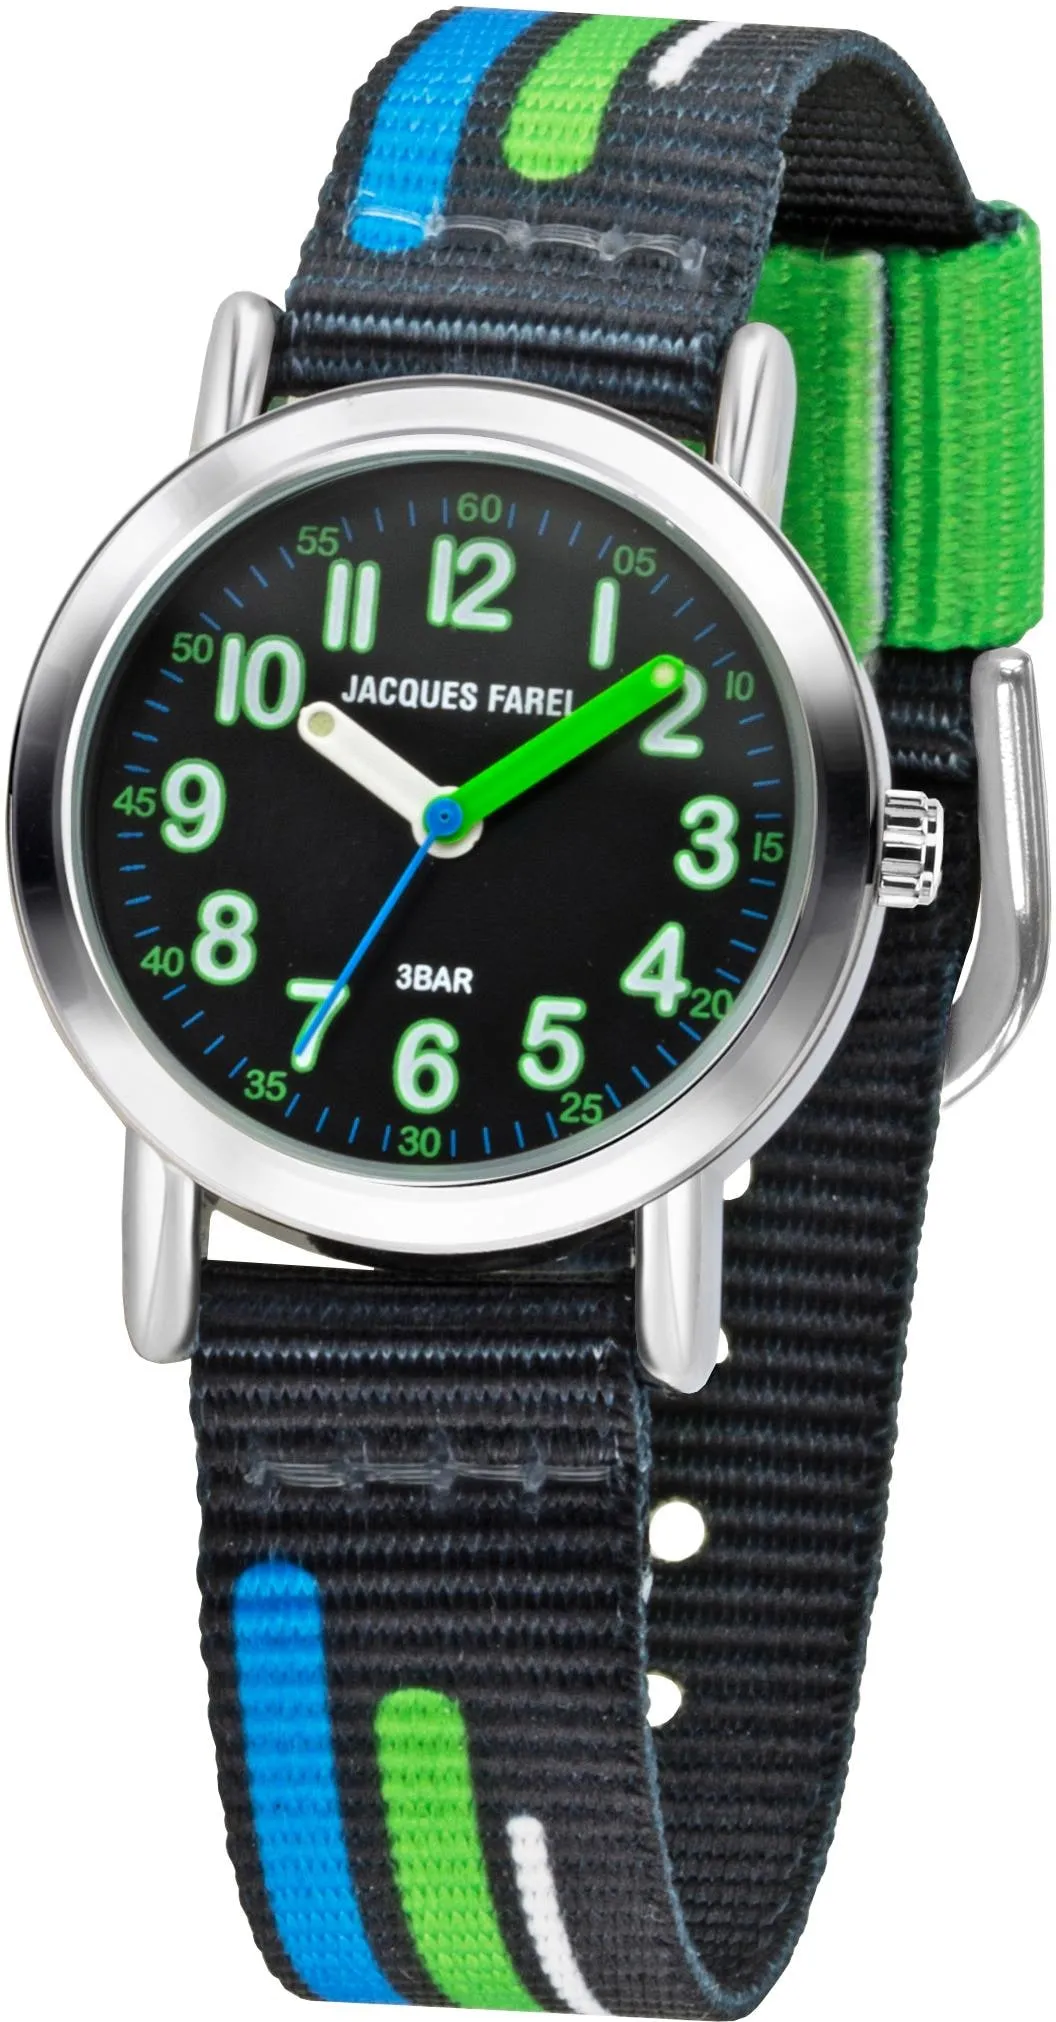 Quarzuhr JACQUES FAREL "KPS 403" Armbanduhren schwarz (schwarz, blau, grün, weiß) Kinder Kinderuhren Armbanduhr, Kinderuhr, ideal auch als Geschenk